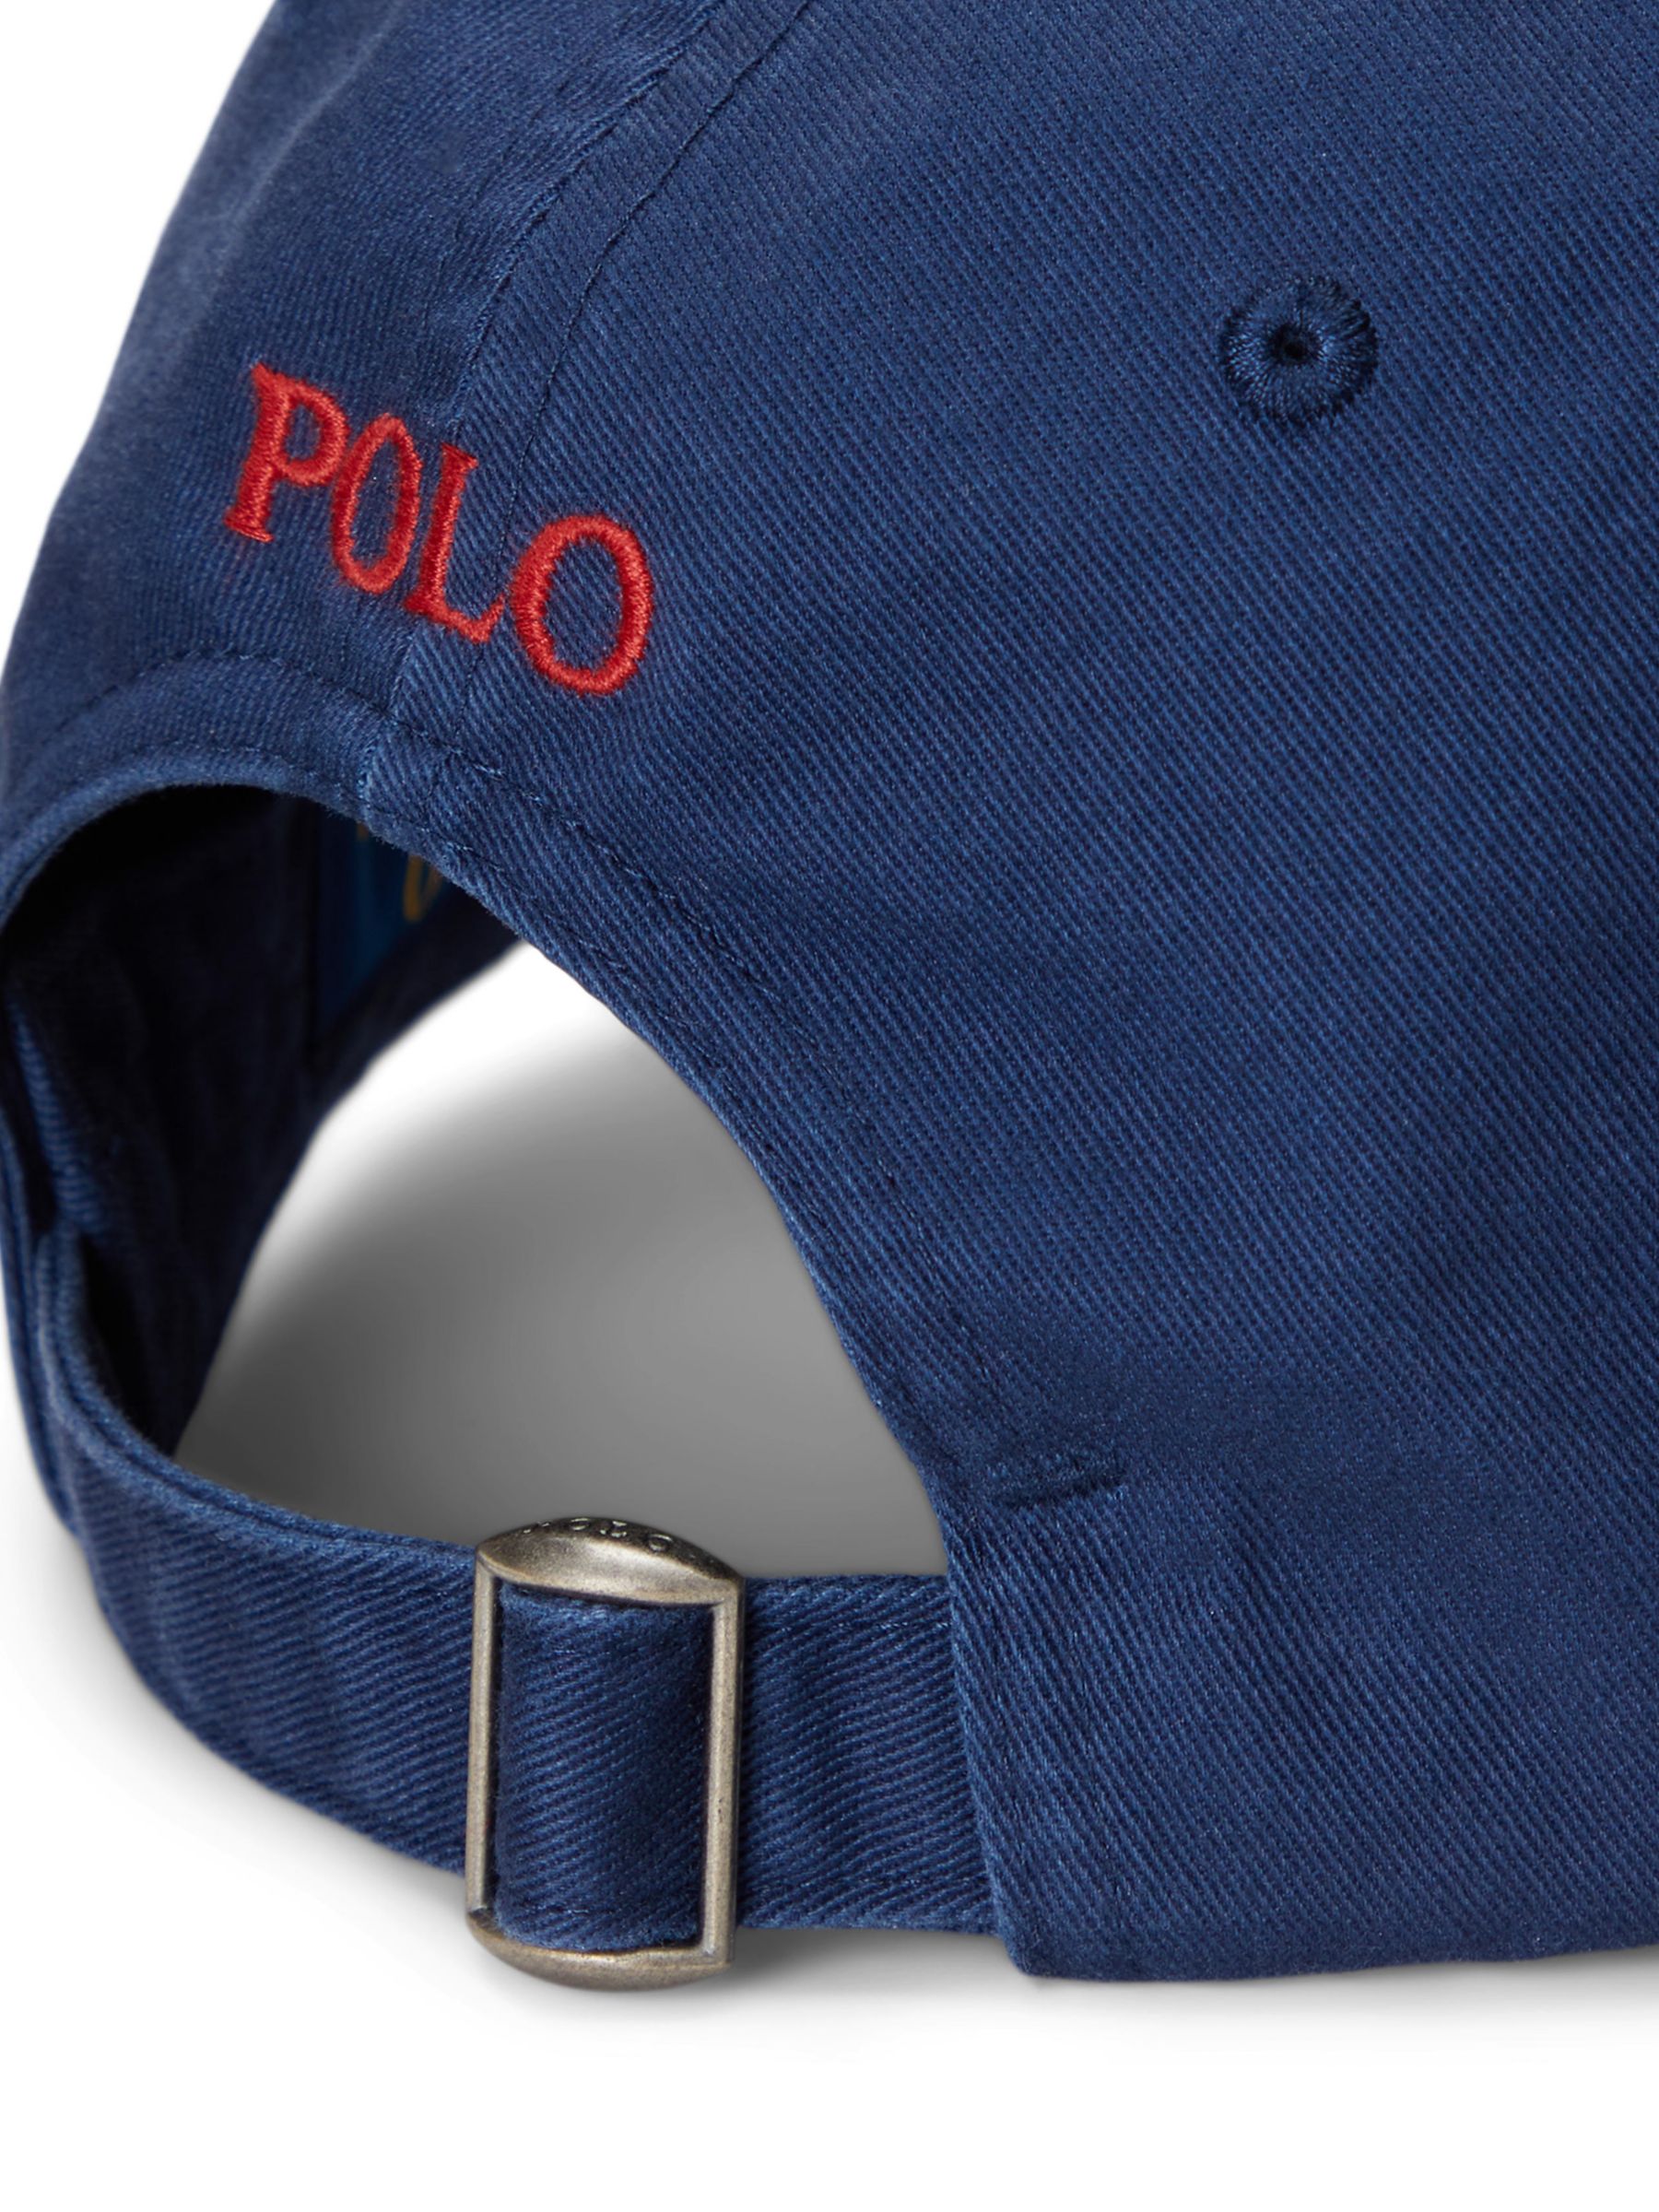 Polo Ralph Lauren Signature Pony Baseball Cap, Navy/Red at John Lewis ...